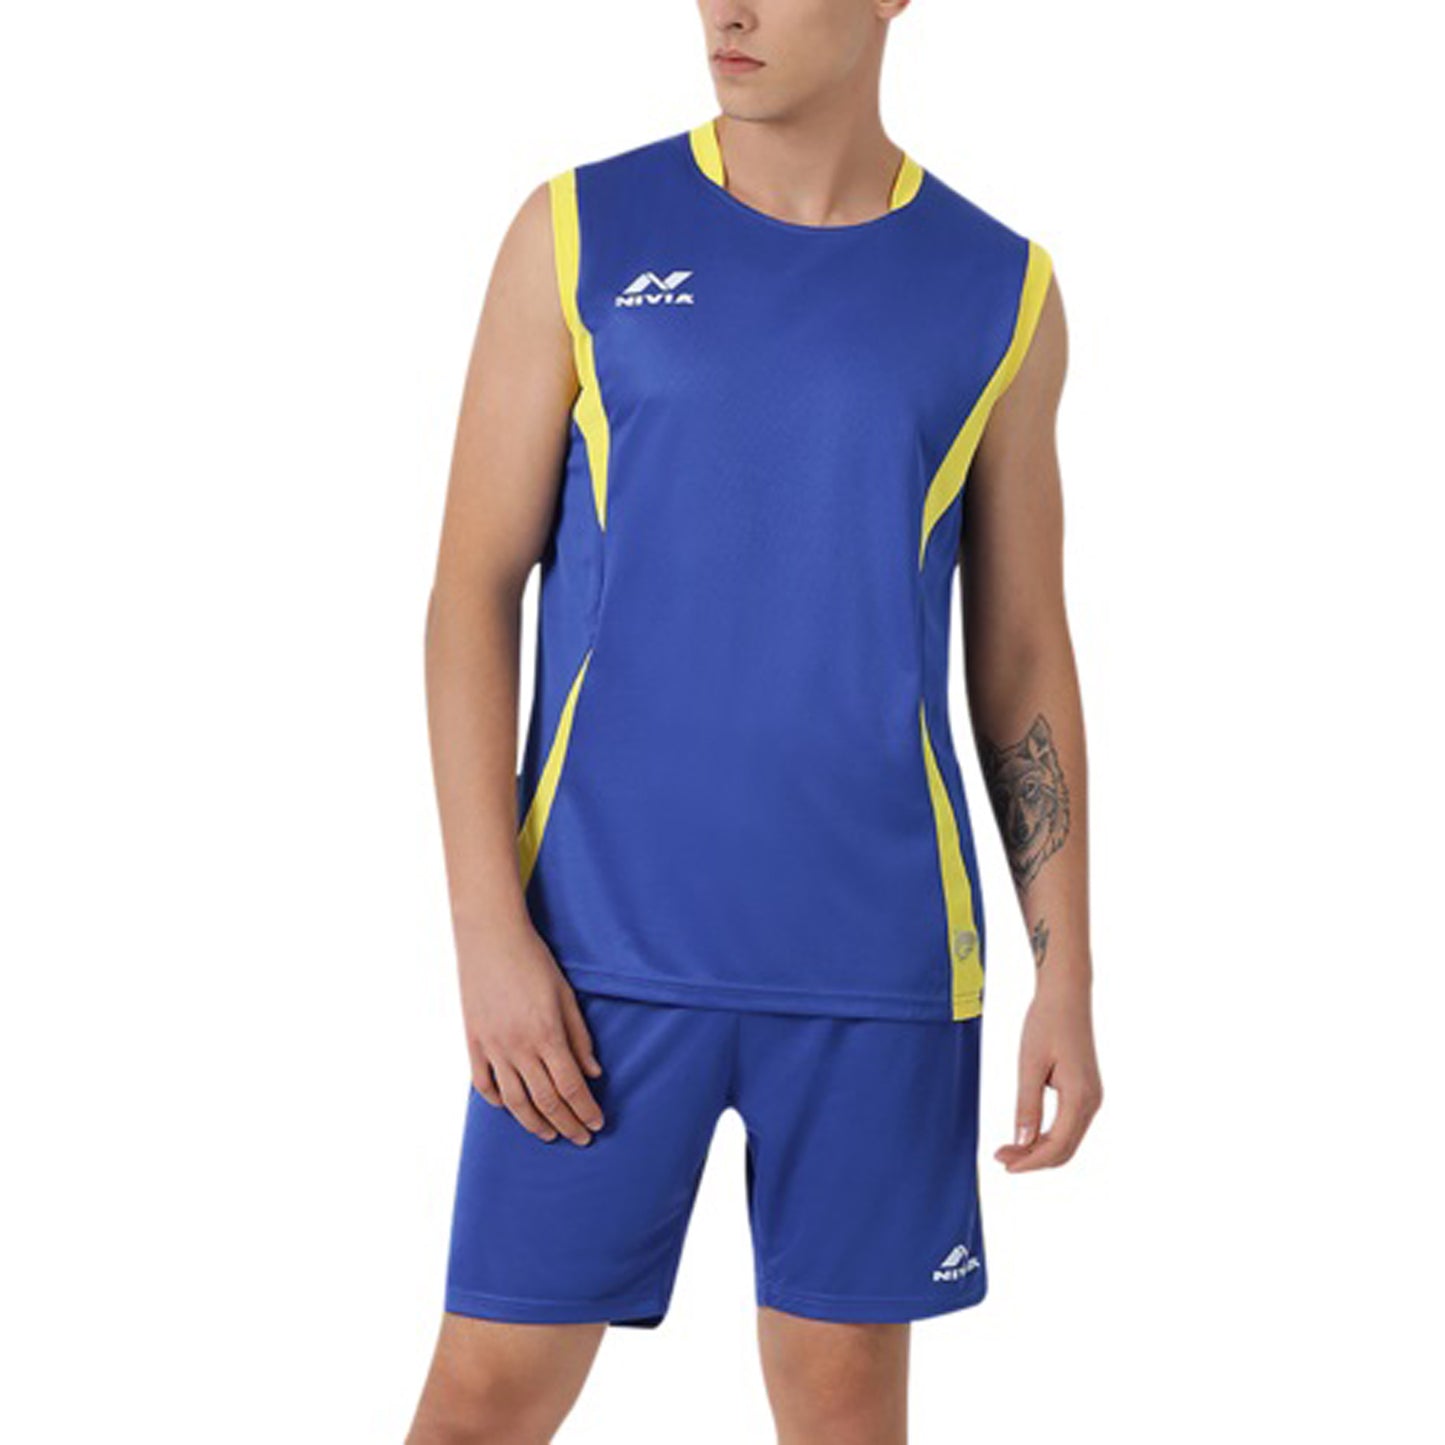 Nivia 2153 Spiral Jersey Set for Men, Royal Blue/Yellow - Best Price online Prokicksports.com